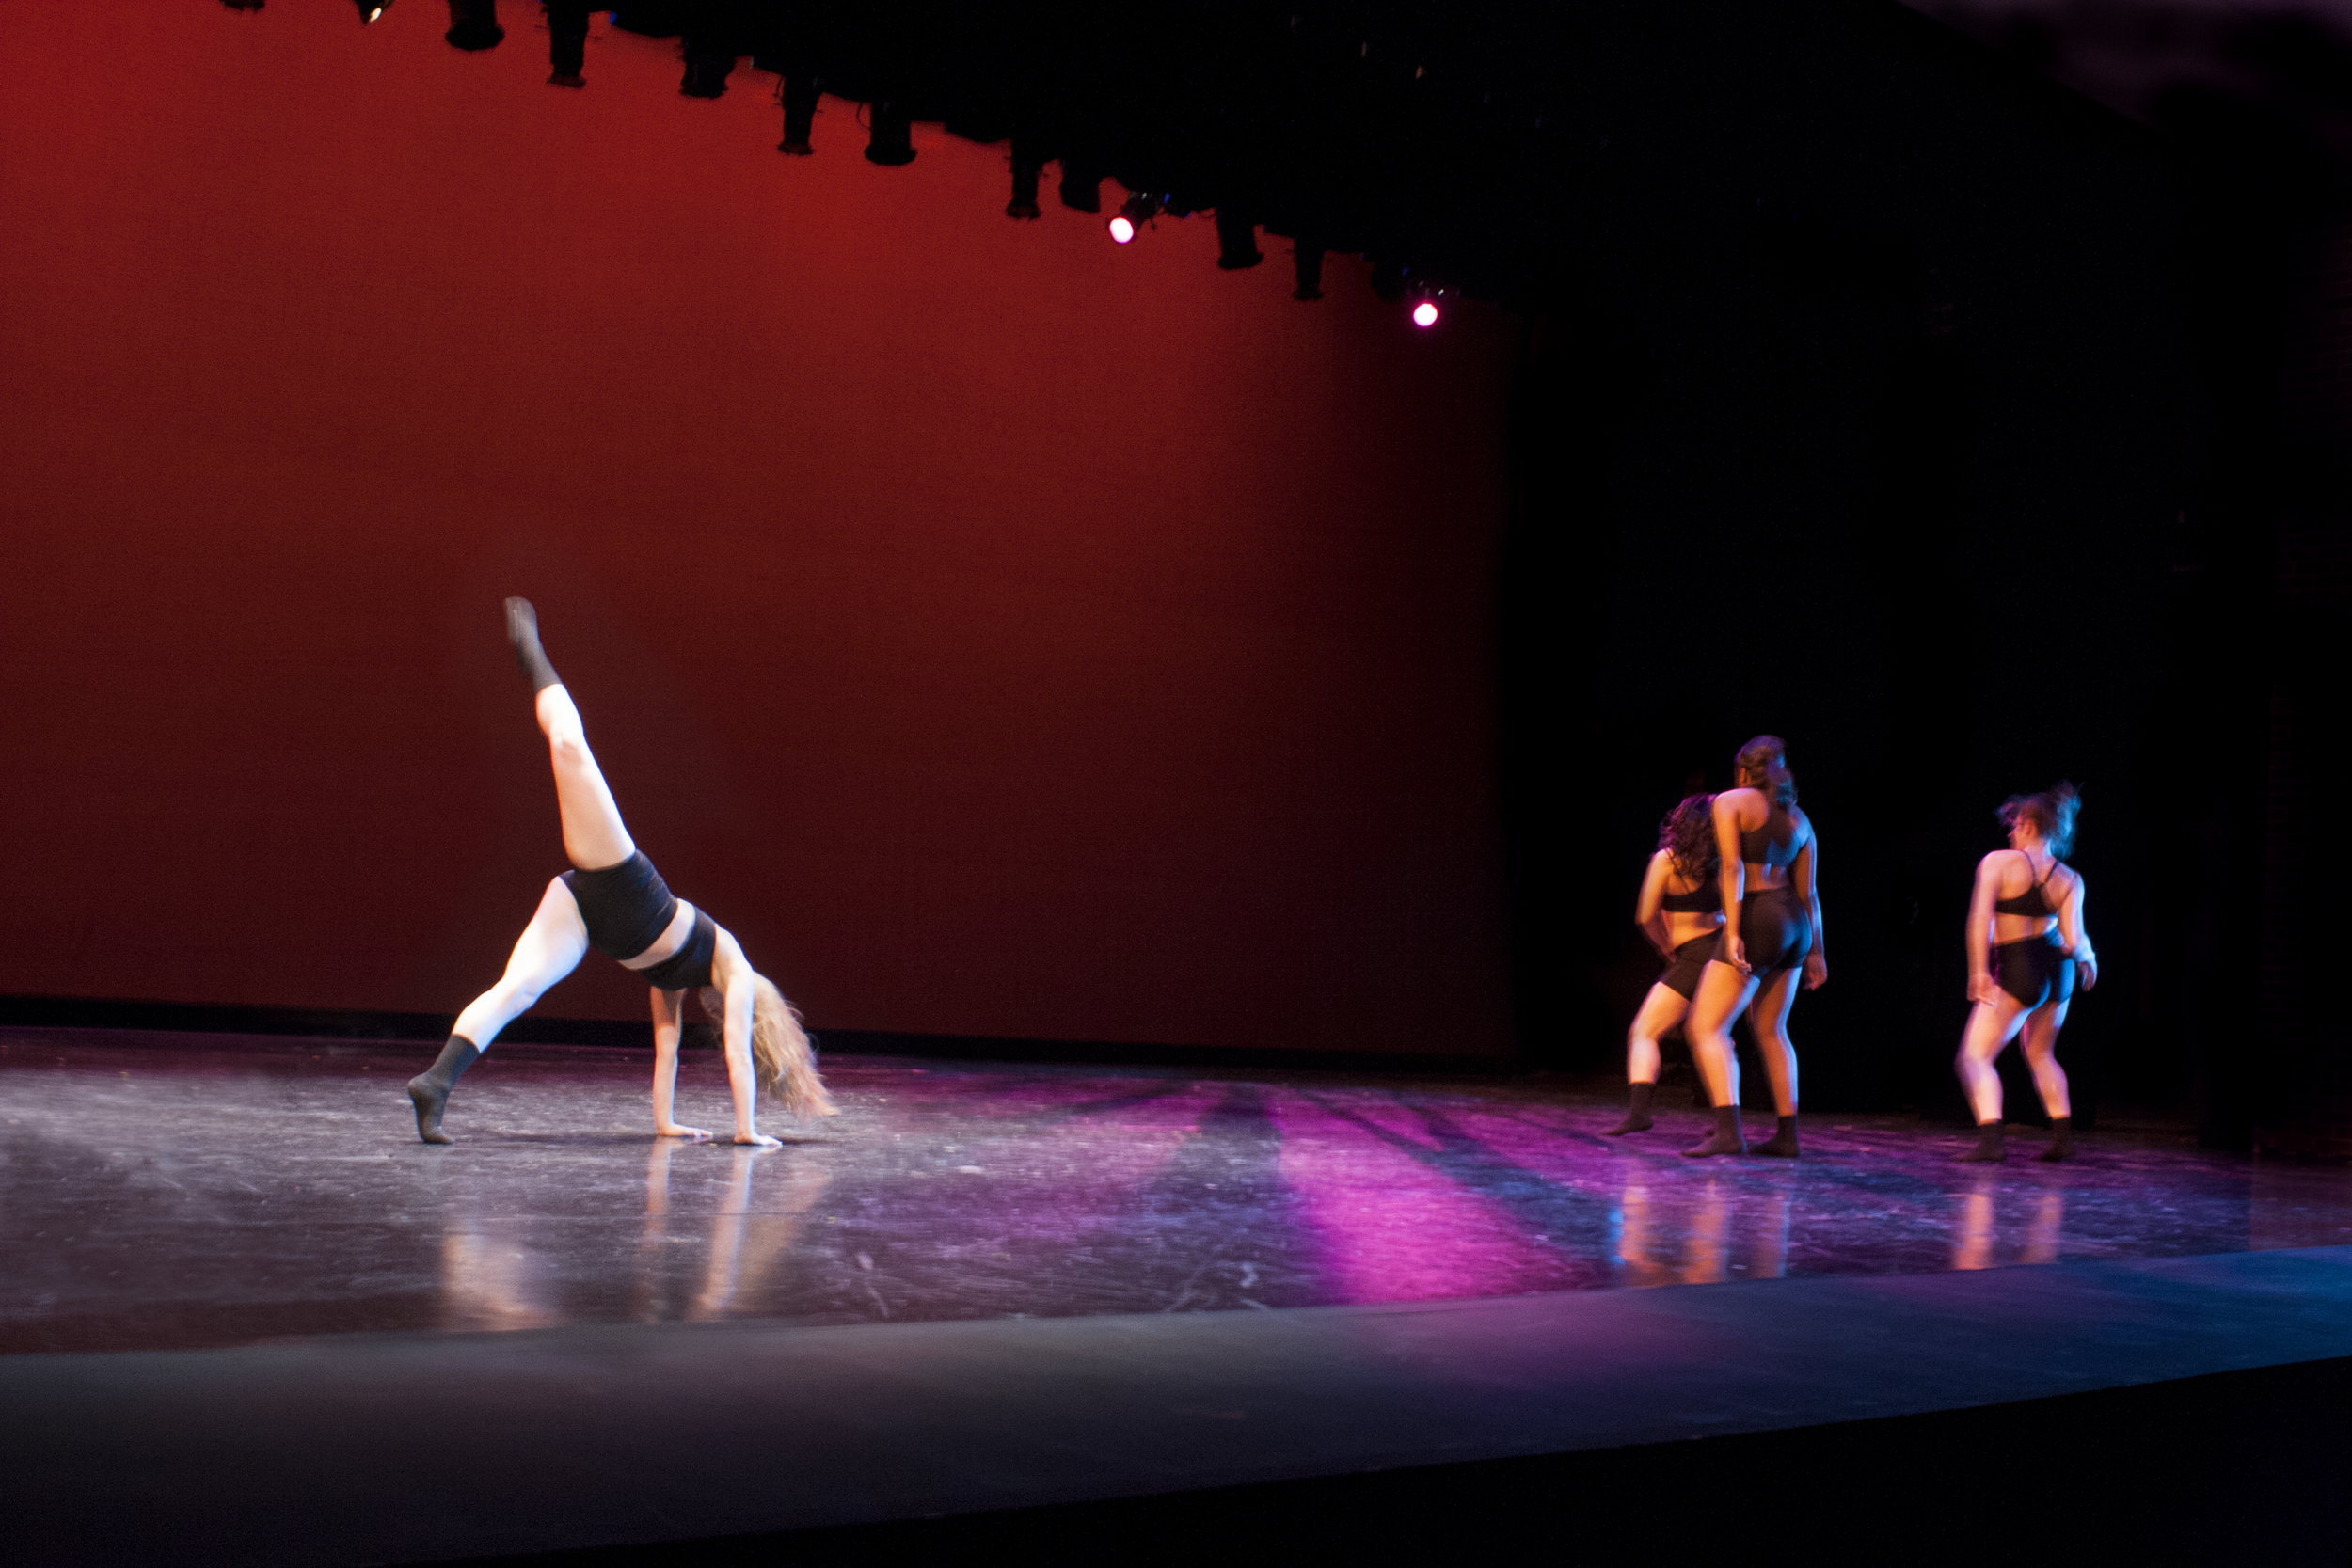   Student Choreograph Showcase 2015   Lighting Designer: Collin Lindgren  Photography: Theresa Kelly 